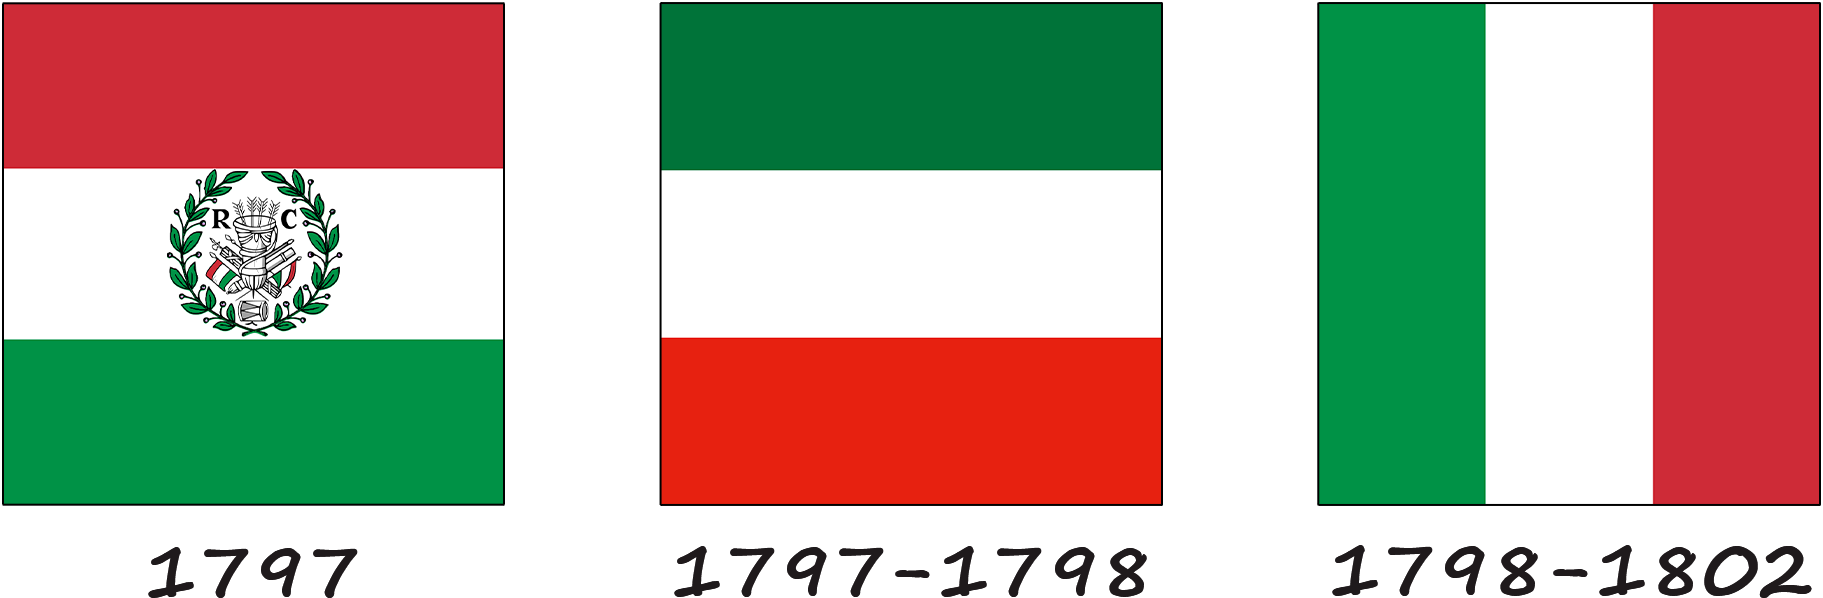 The history of the Italian flag